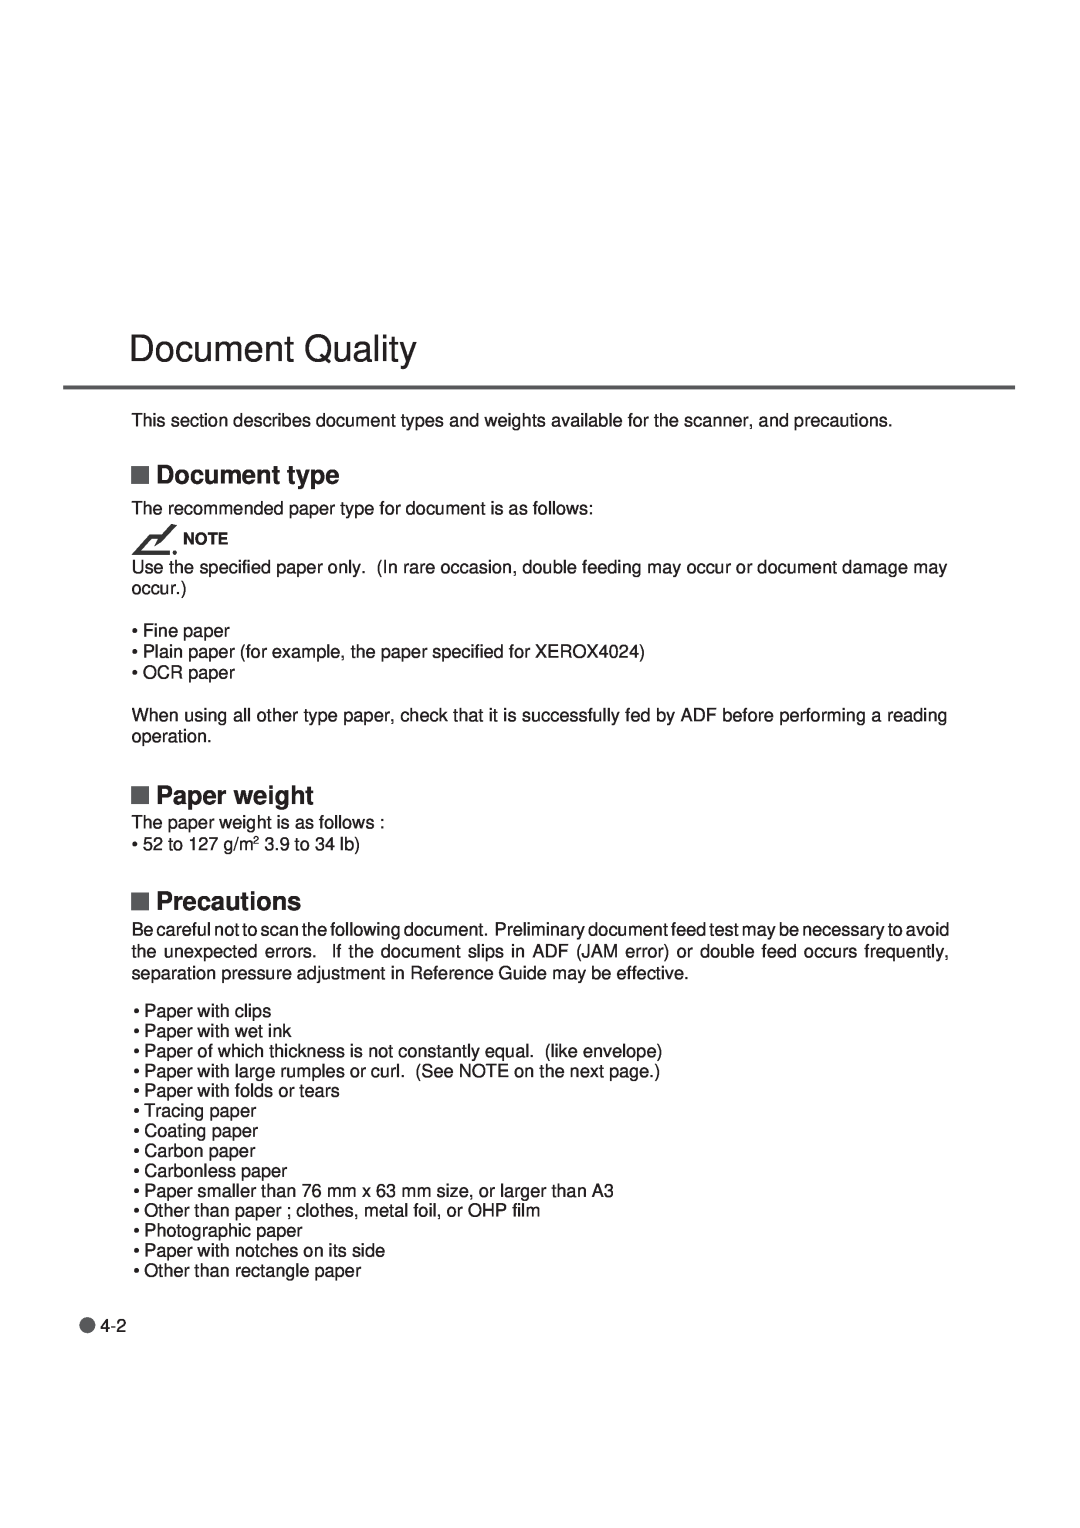 Fujitsu M3099GX, M3099GH, M3099EX, M3099EH manual Document Quality, Document type, Paper weight, Precautions 